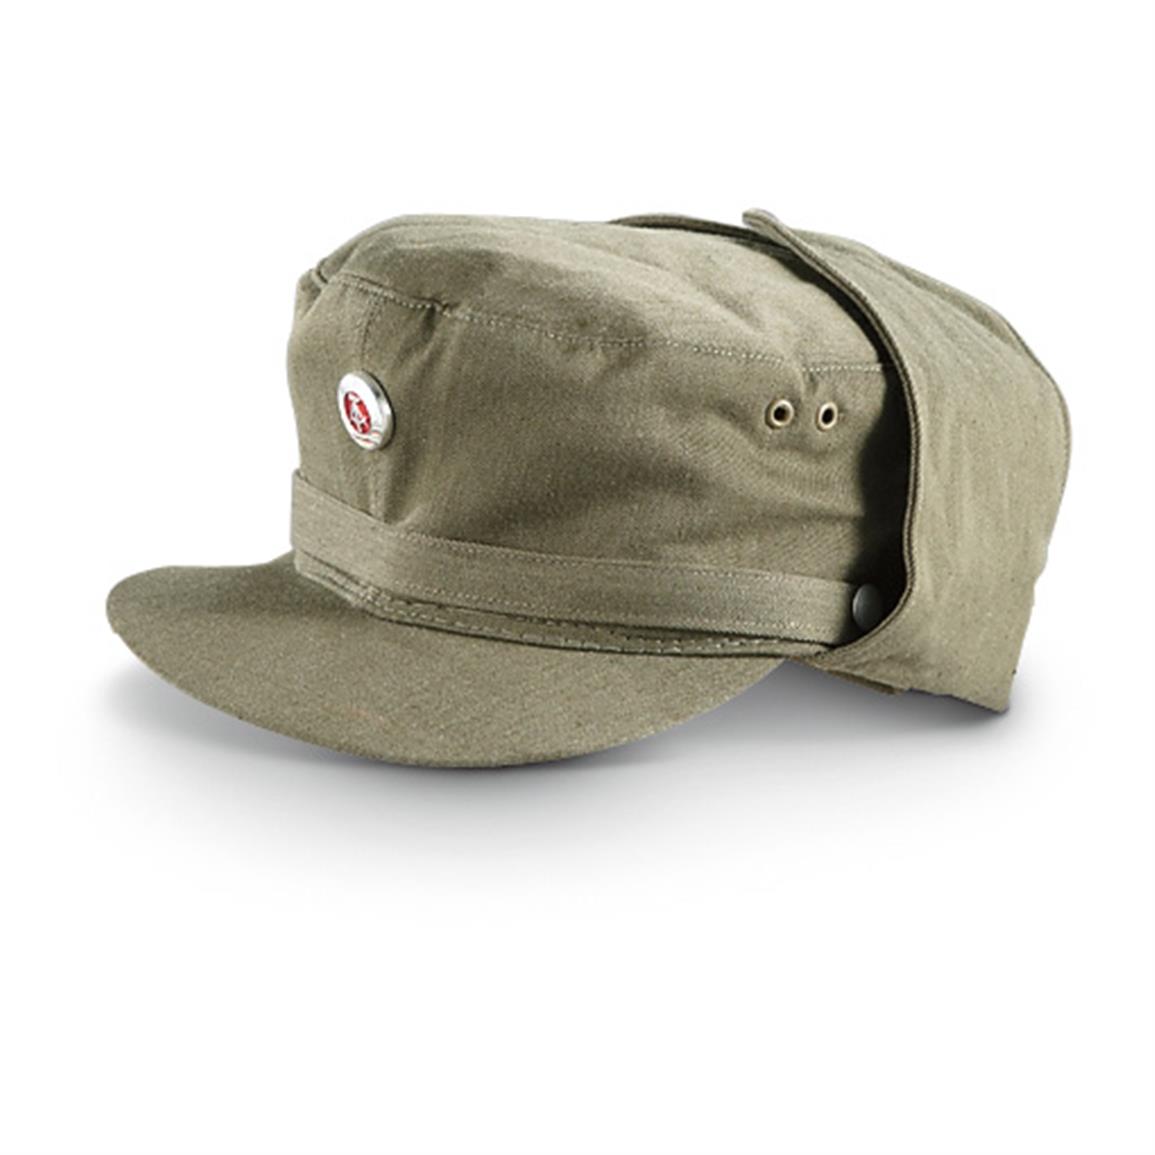 3 Used East German Military Surplus Caps Olive Drab 307475 Hats